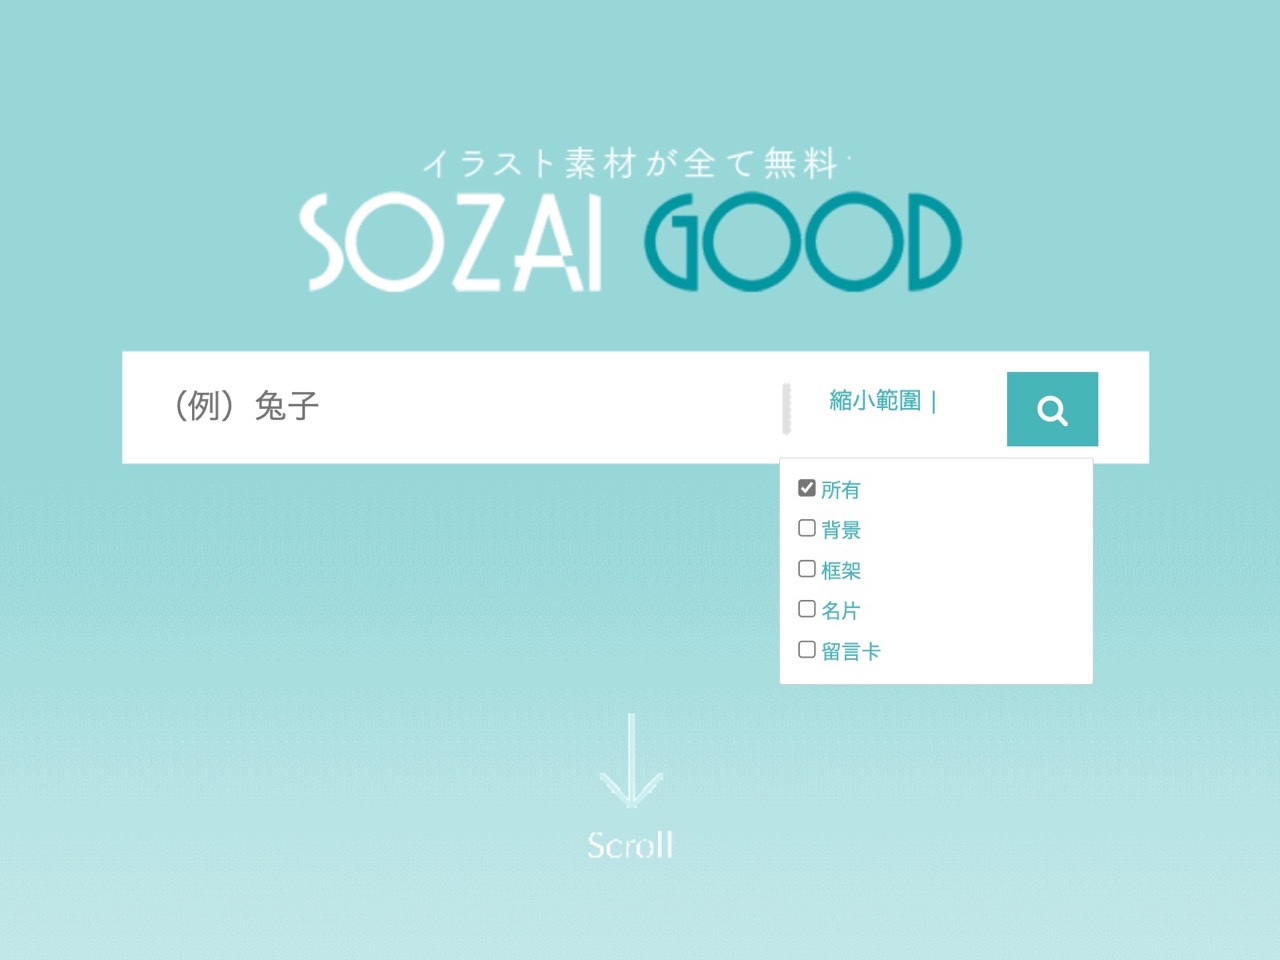 Sozai Good